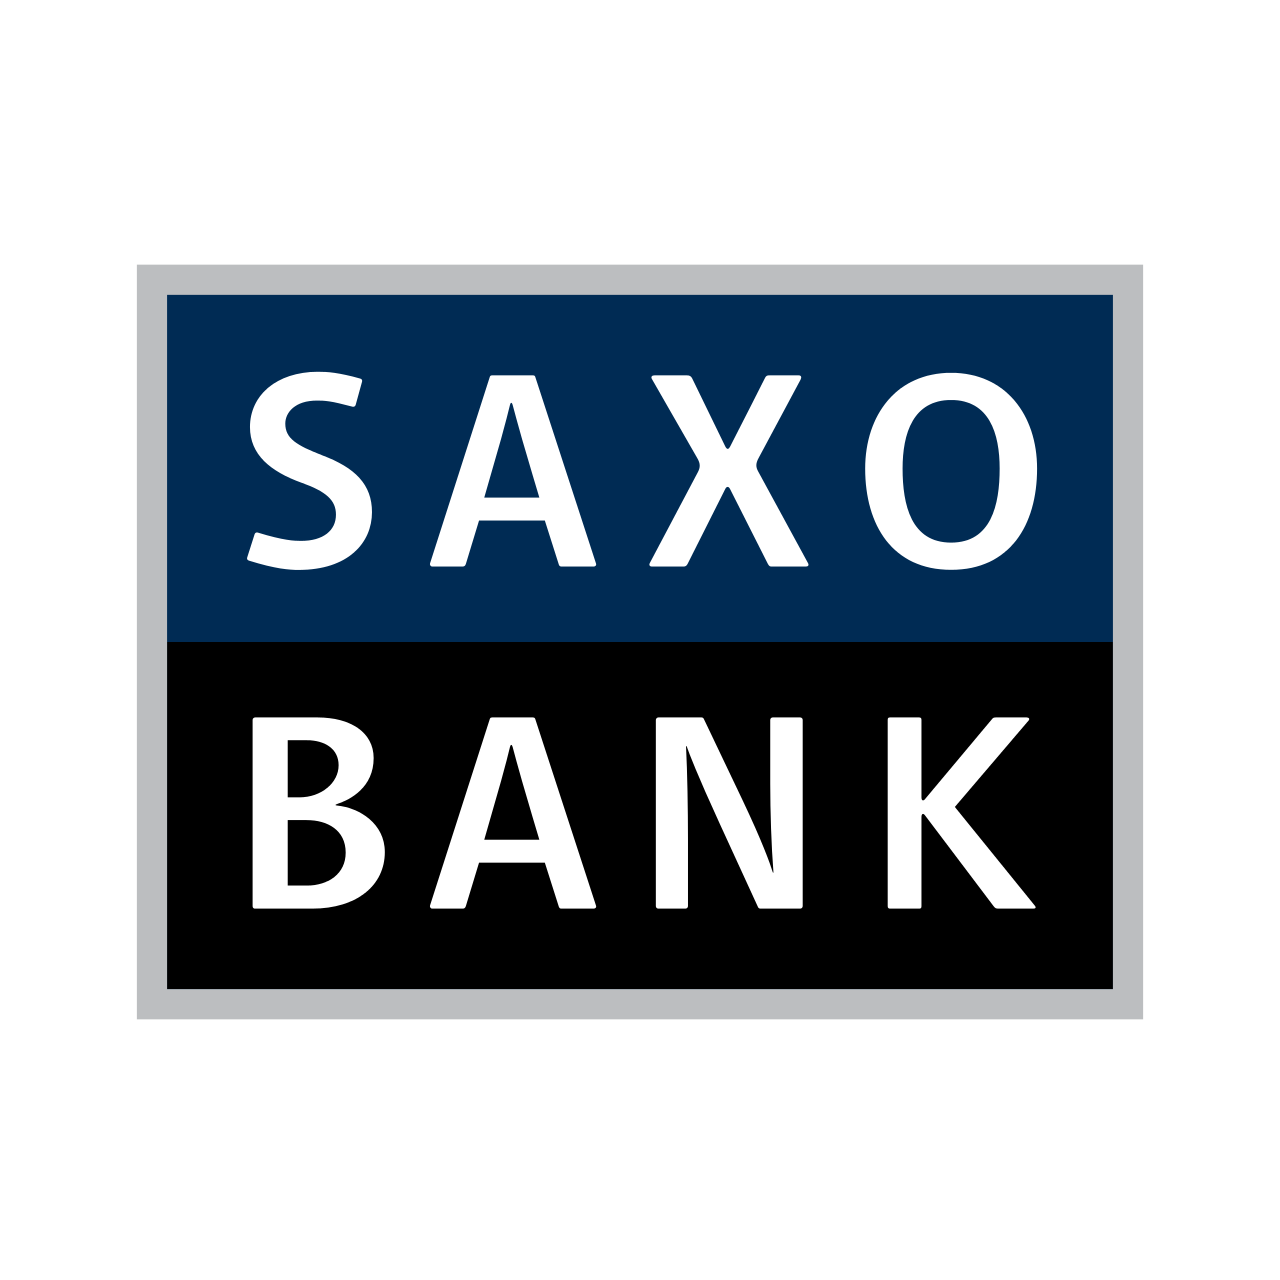 Saxo bank forex margin calculator accounting cryptocurrency